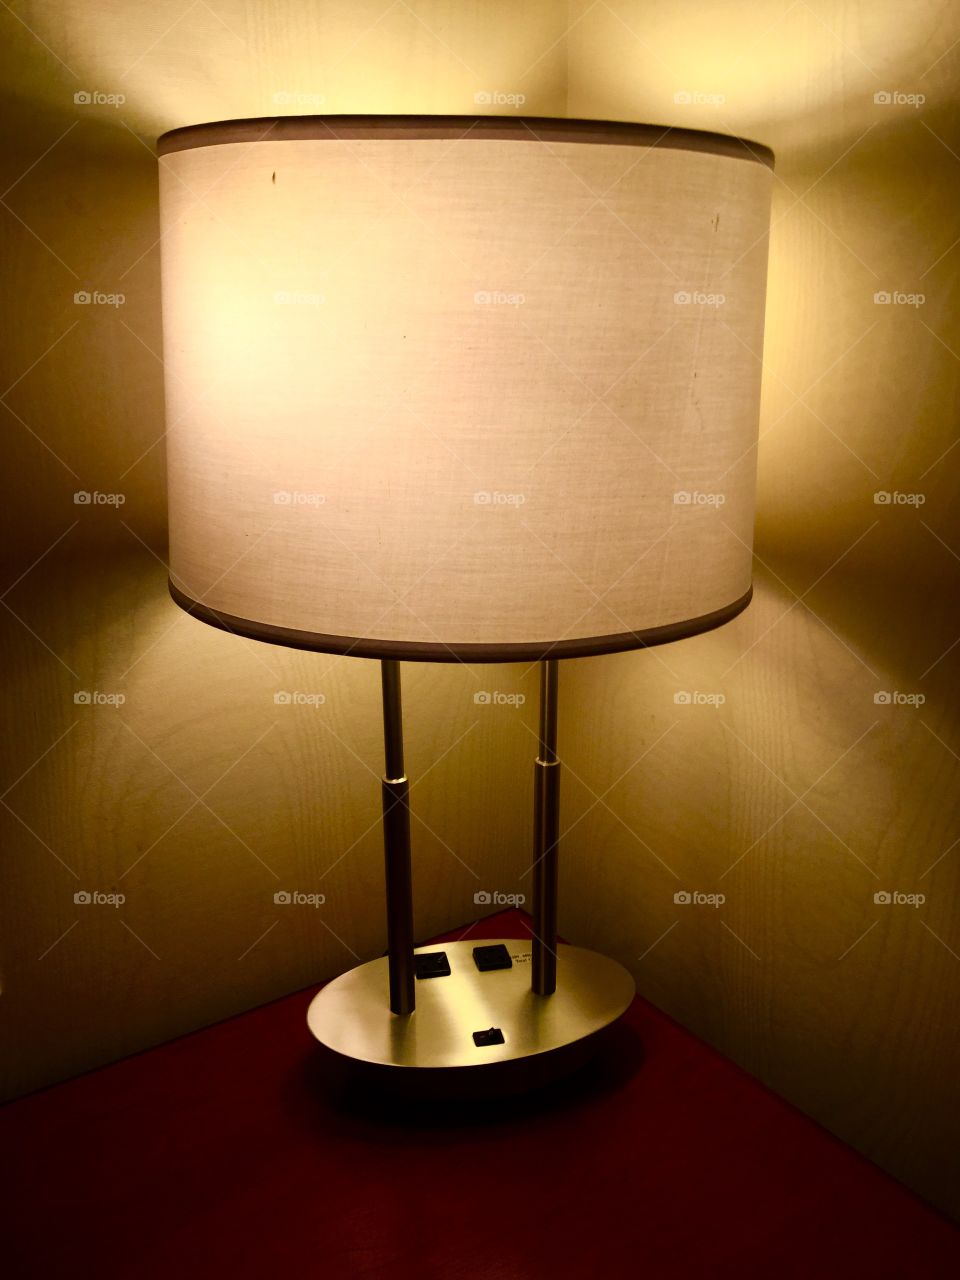 Lamp Light
